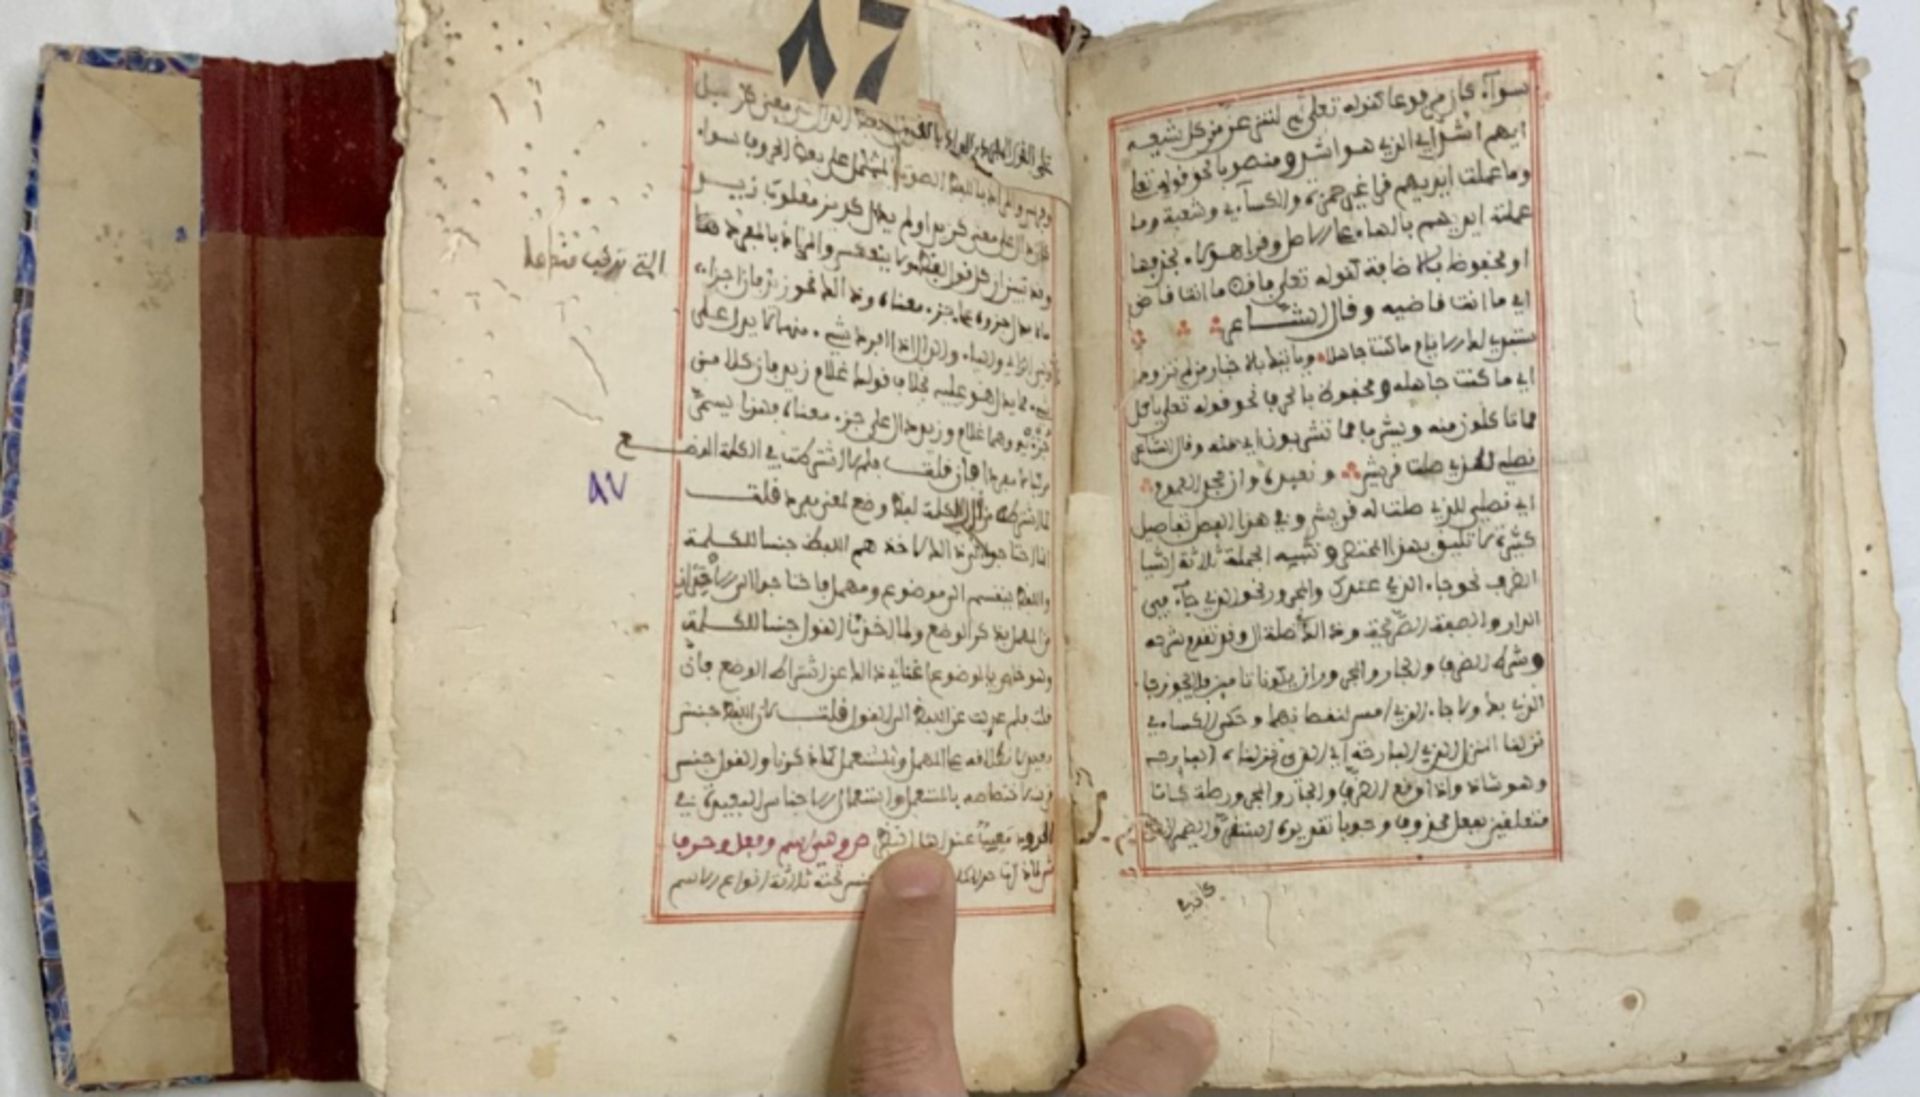 An Islamic manuscript on morphology and rhetoric - Image 13 of 18